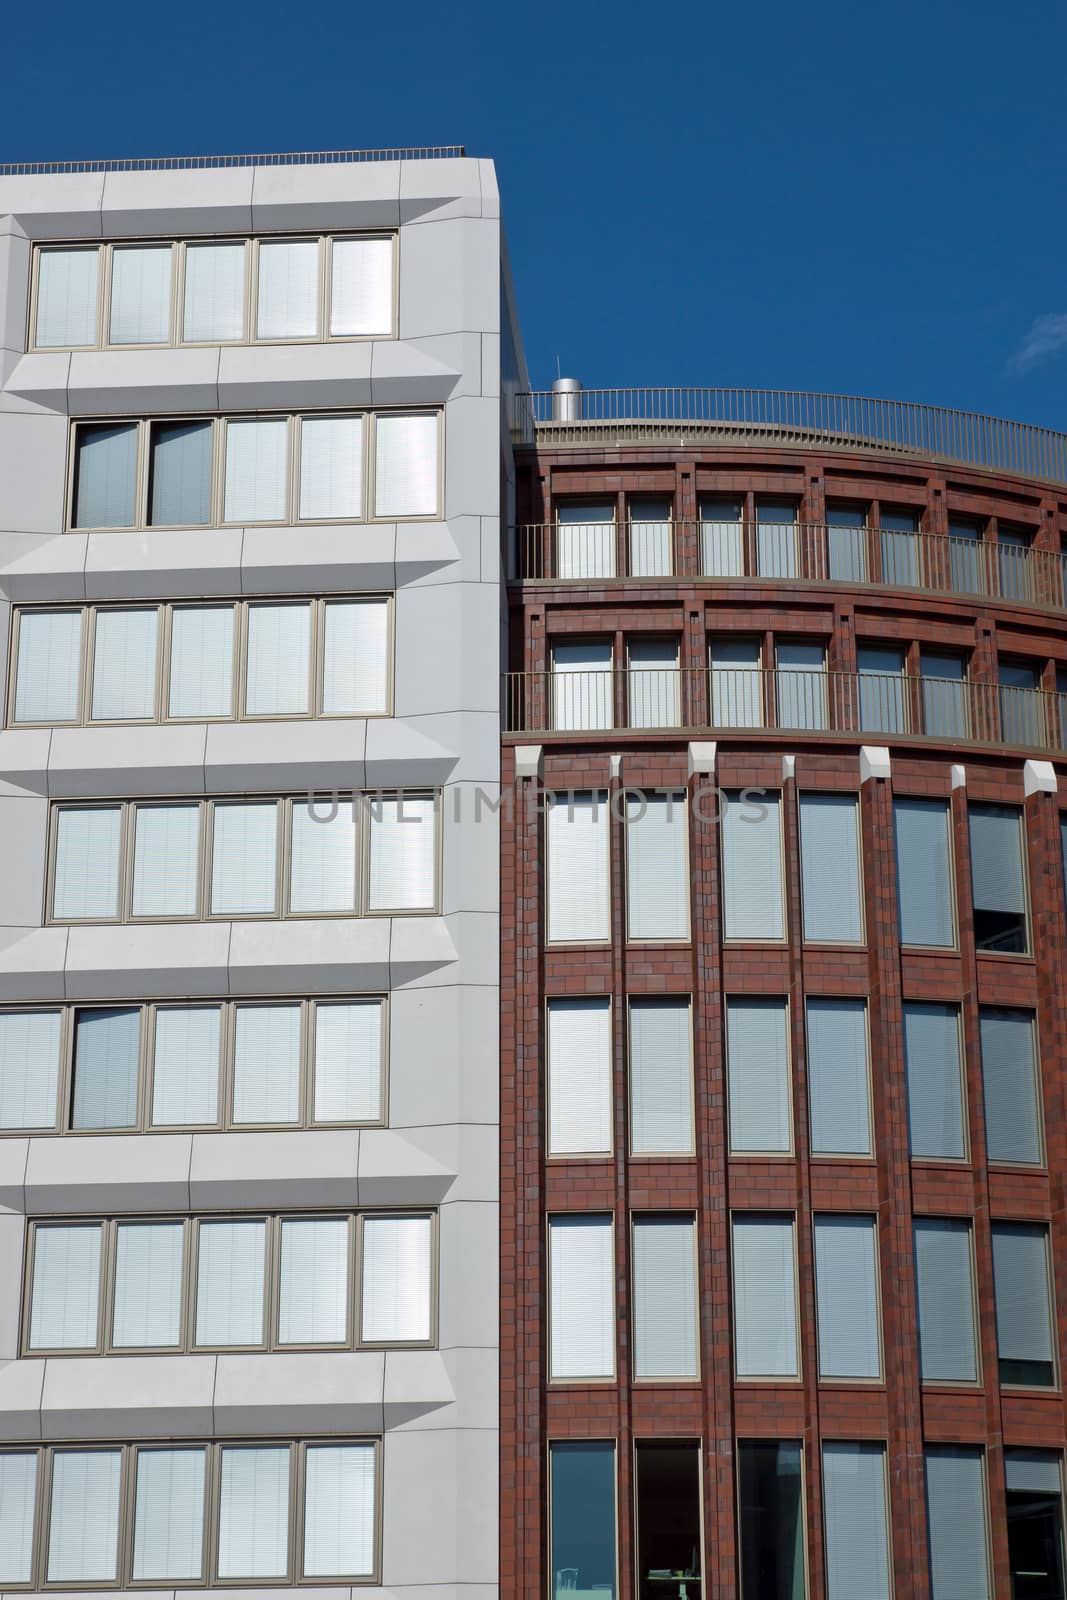 Two modern office buildings in Berlin with silver shutters